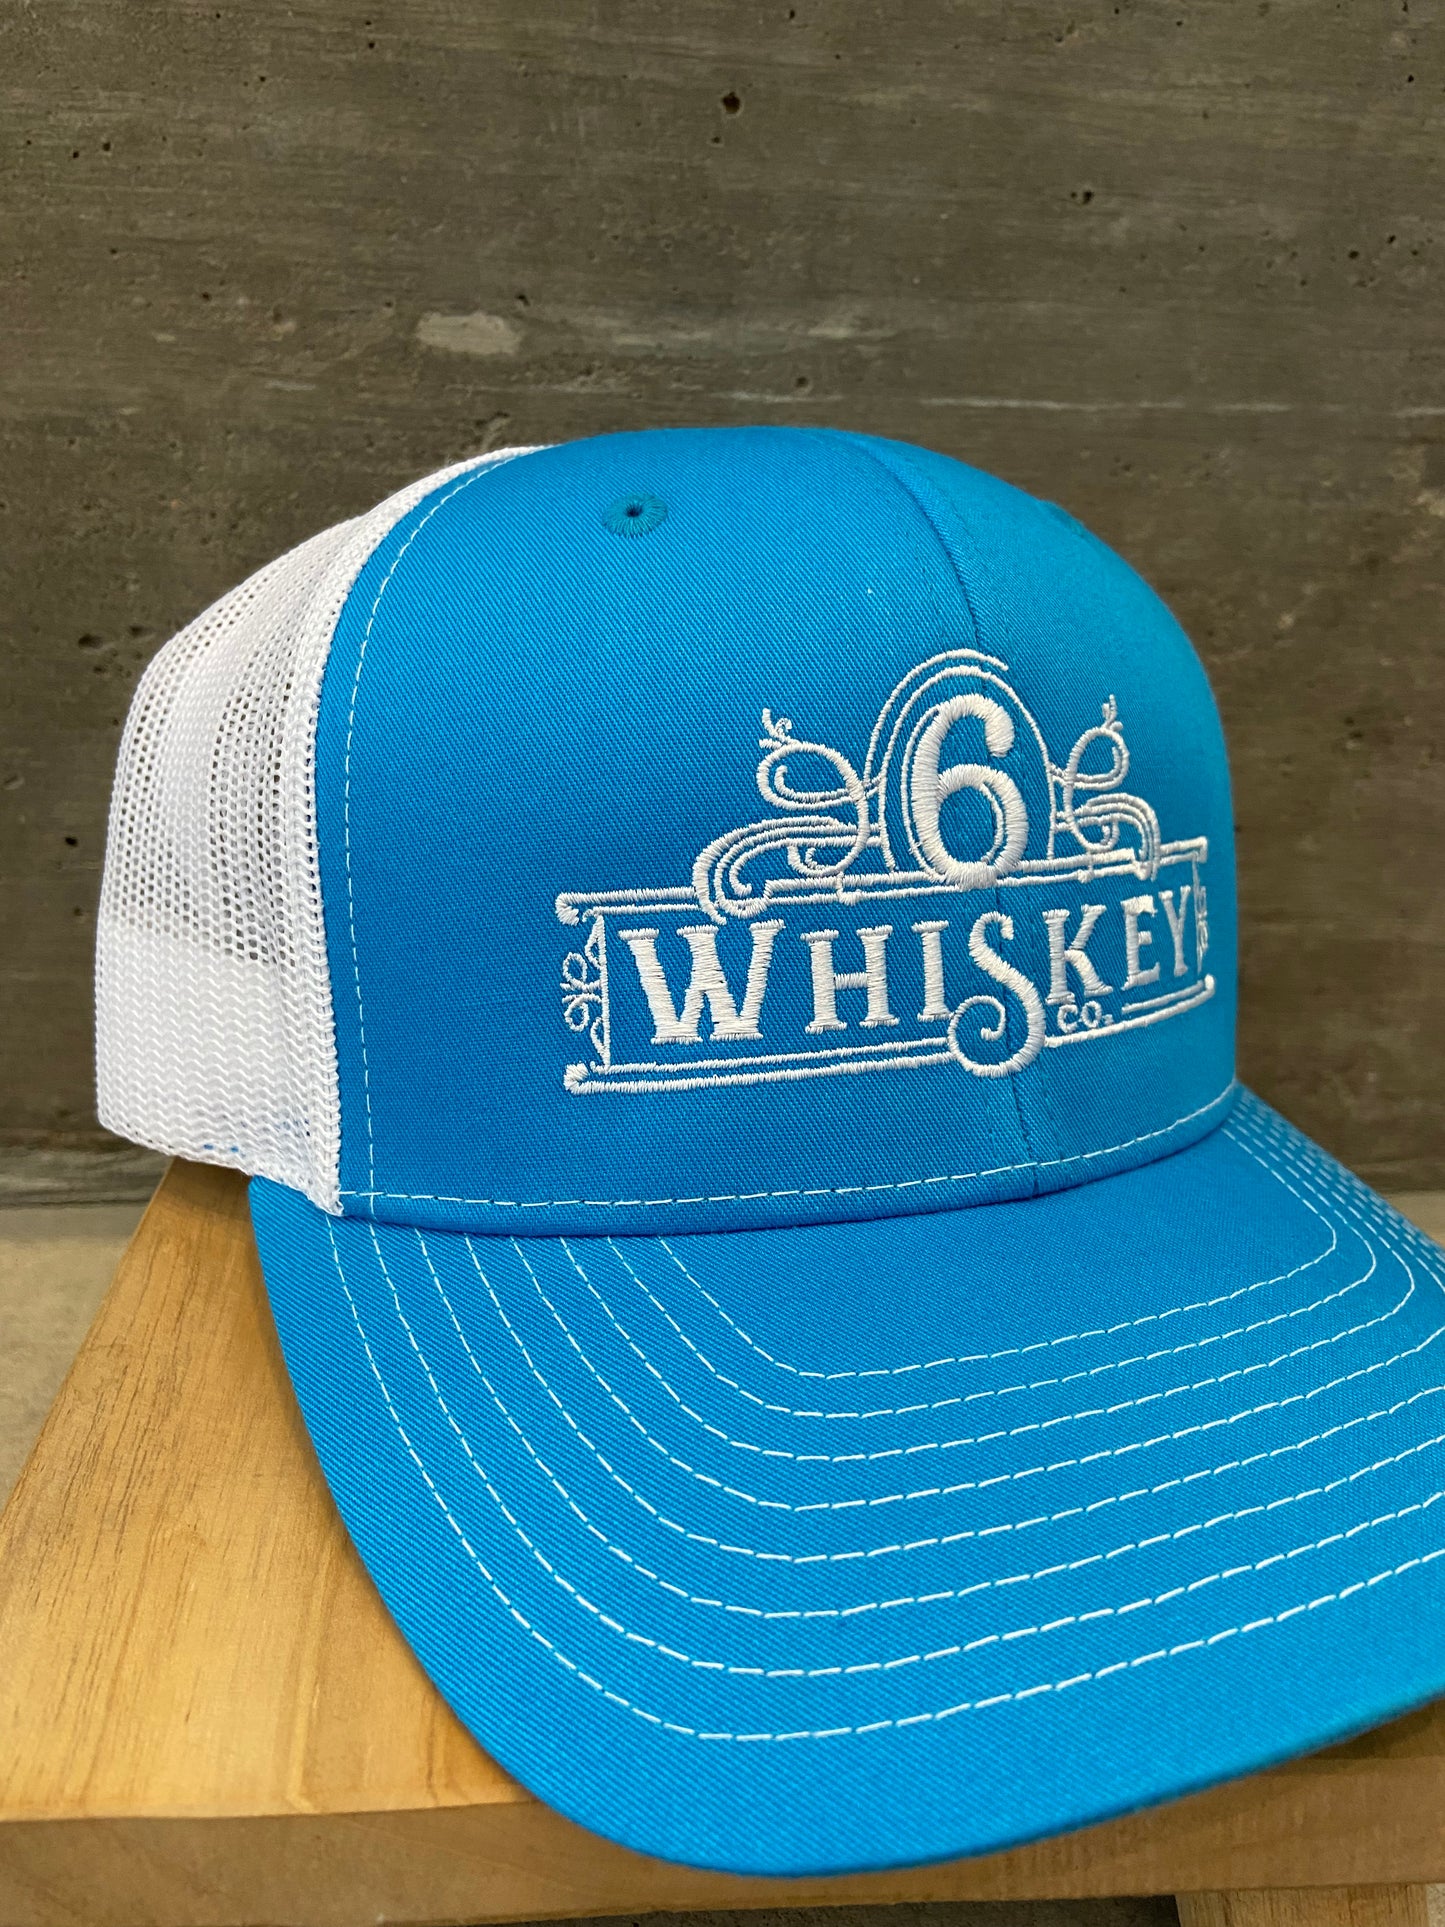 Blue and White Richardson 112 Trucker hat at 6Whiskey six whisky logo mesh back mens cap